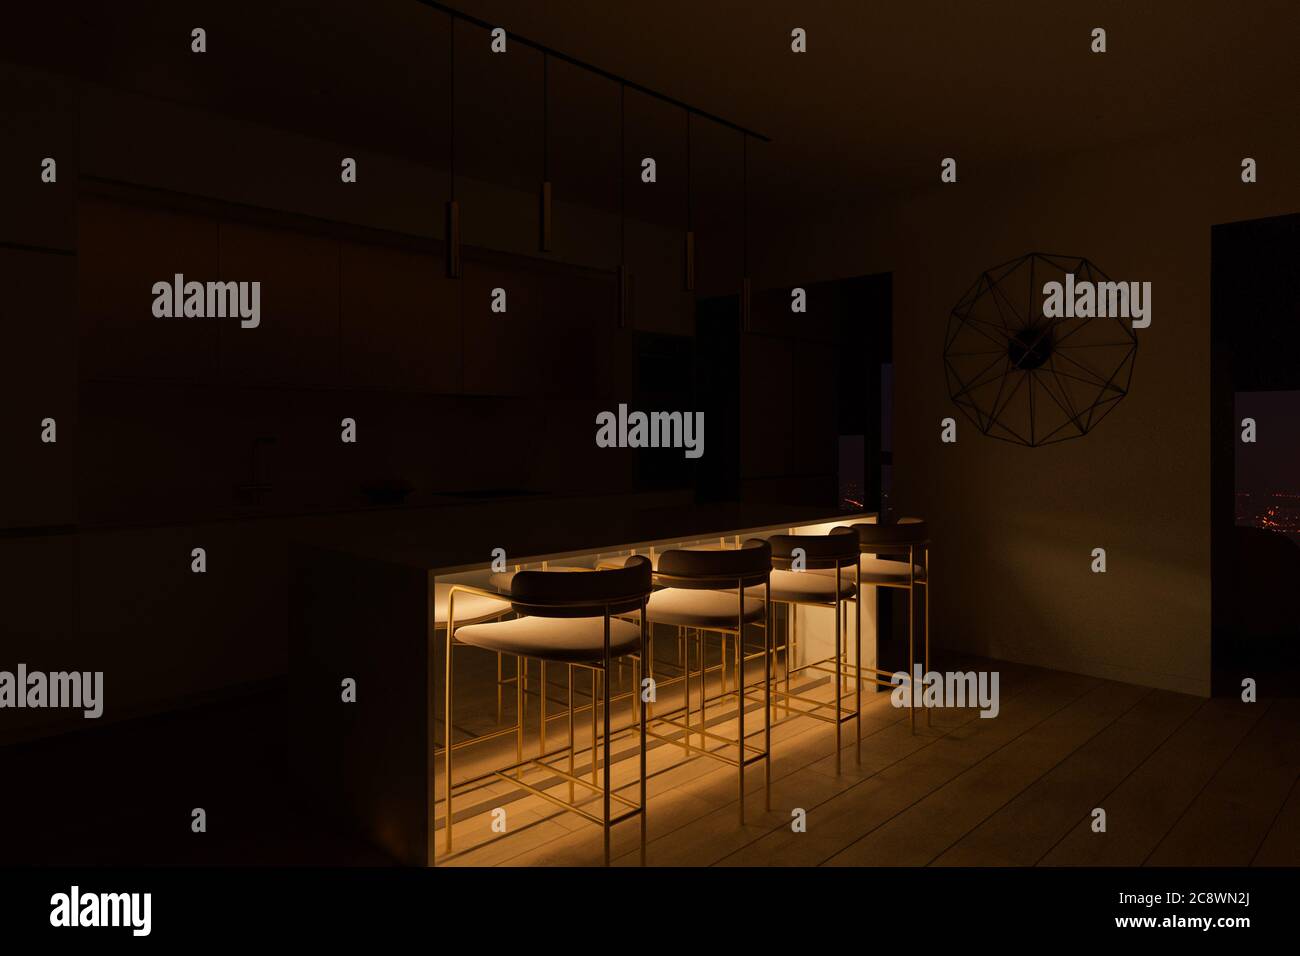 3D illustration kitchen interior design with led island lighting Stock Photo